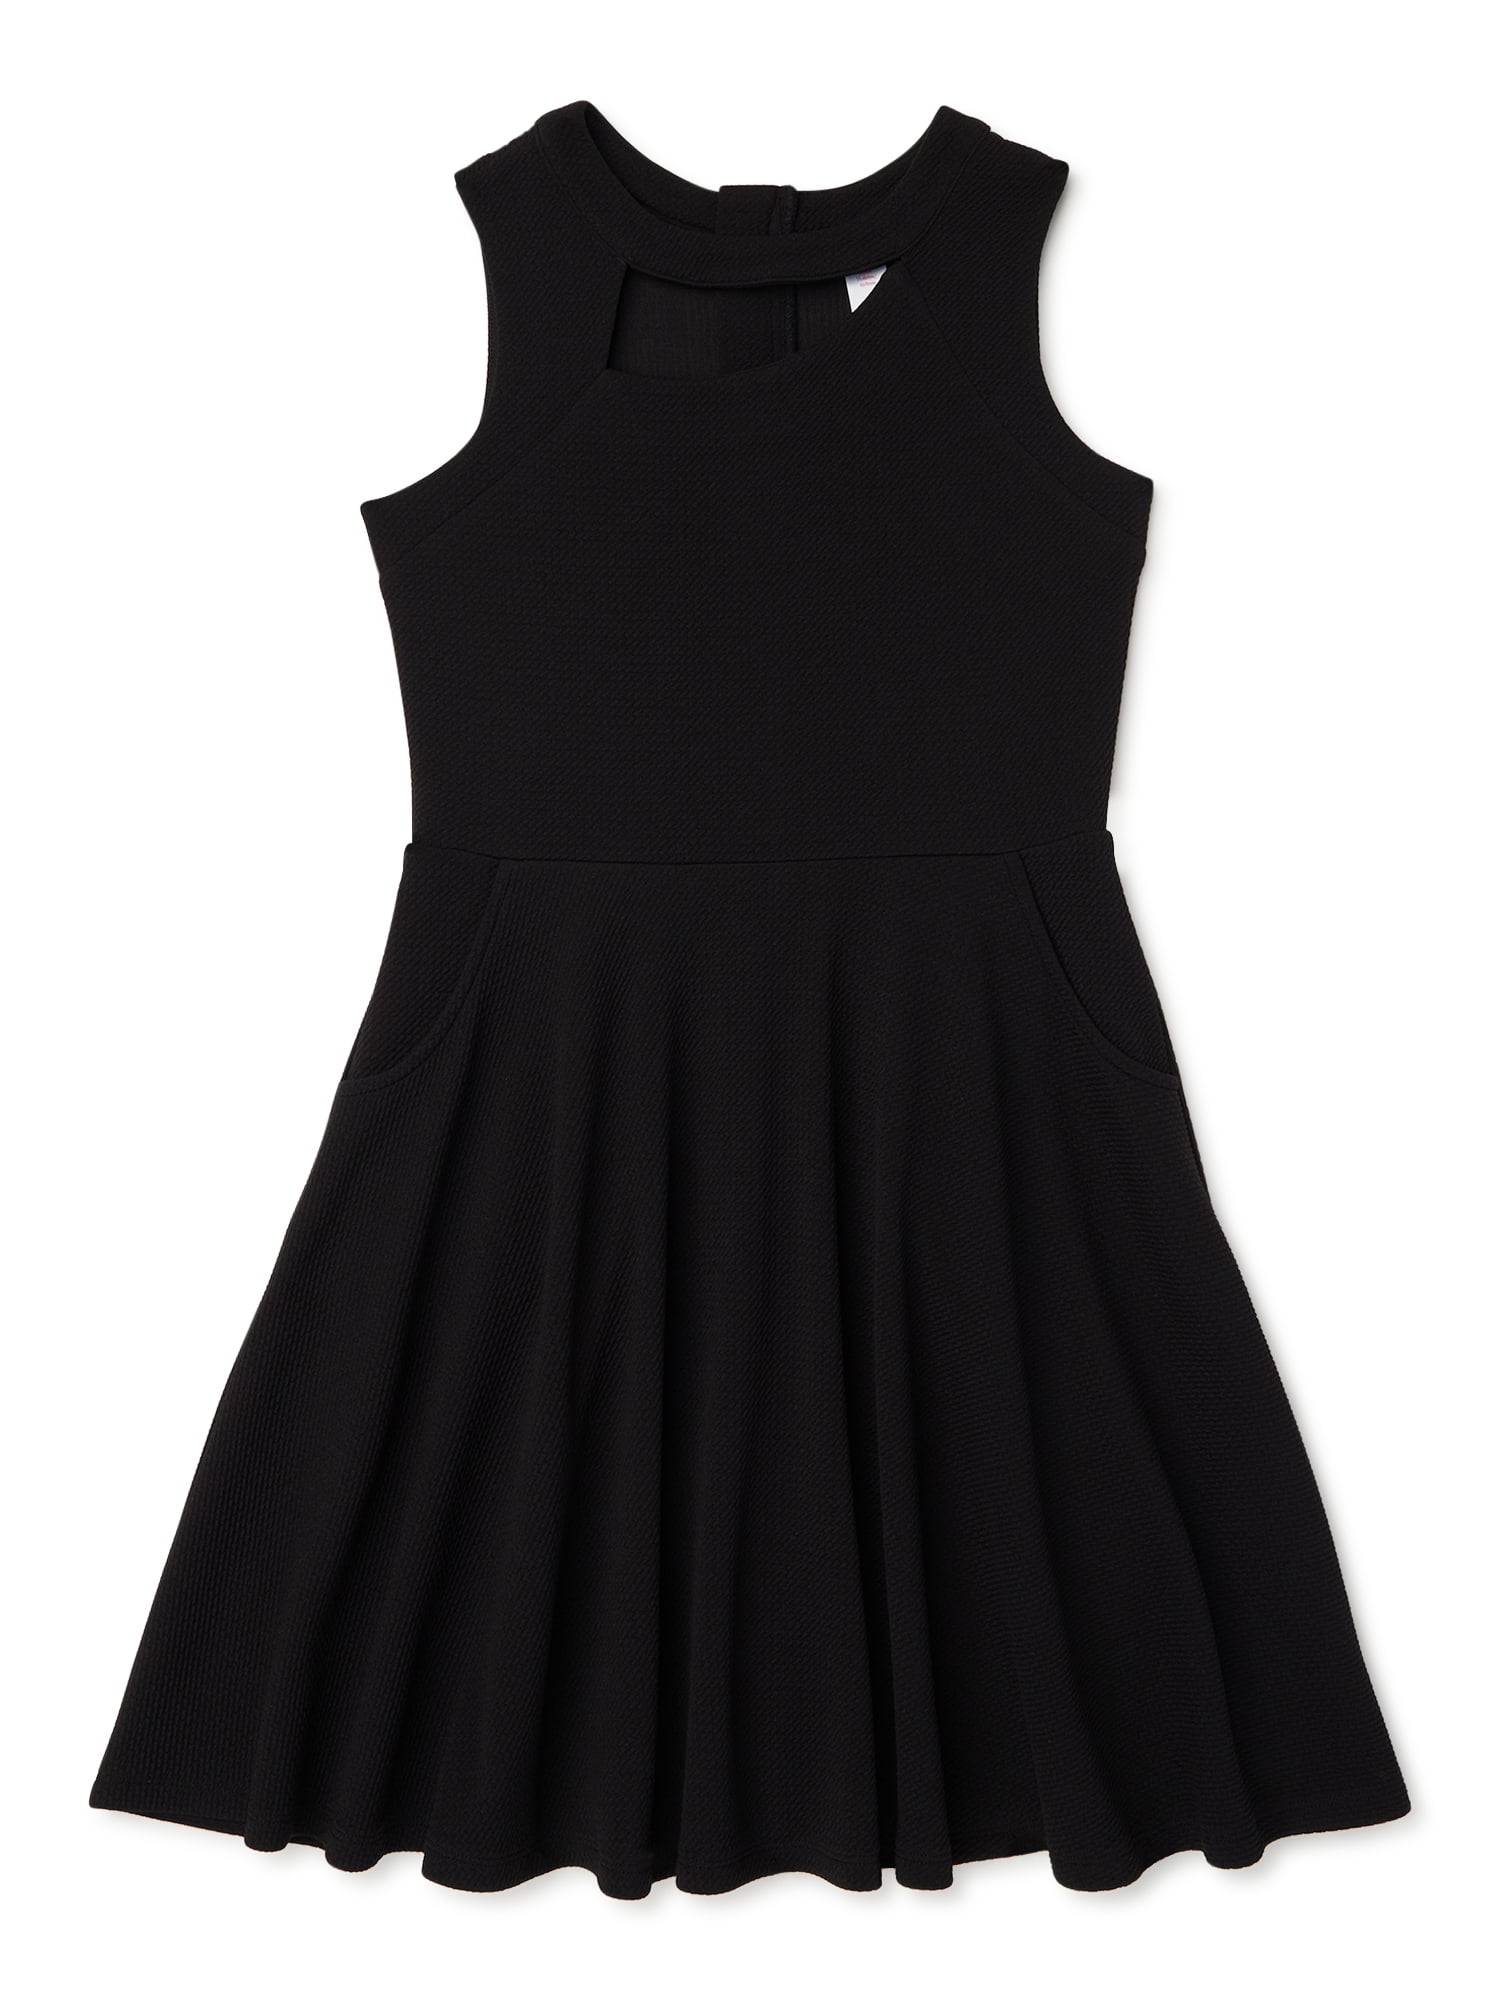 Justice Girls Sleeveless Dress, Sizes 5-18 Plus - Walmart.com